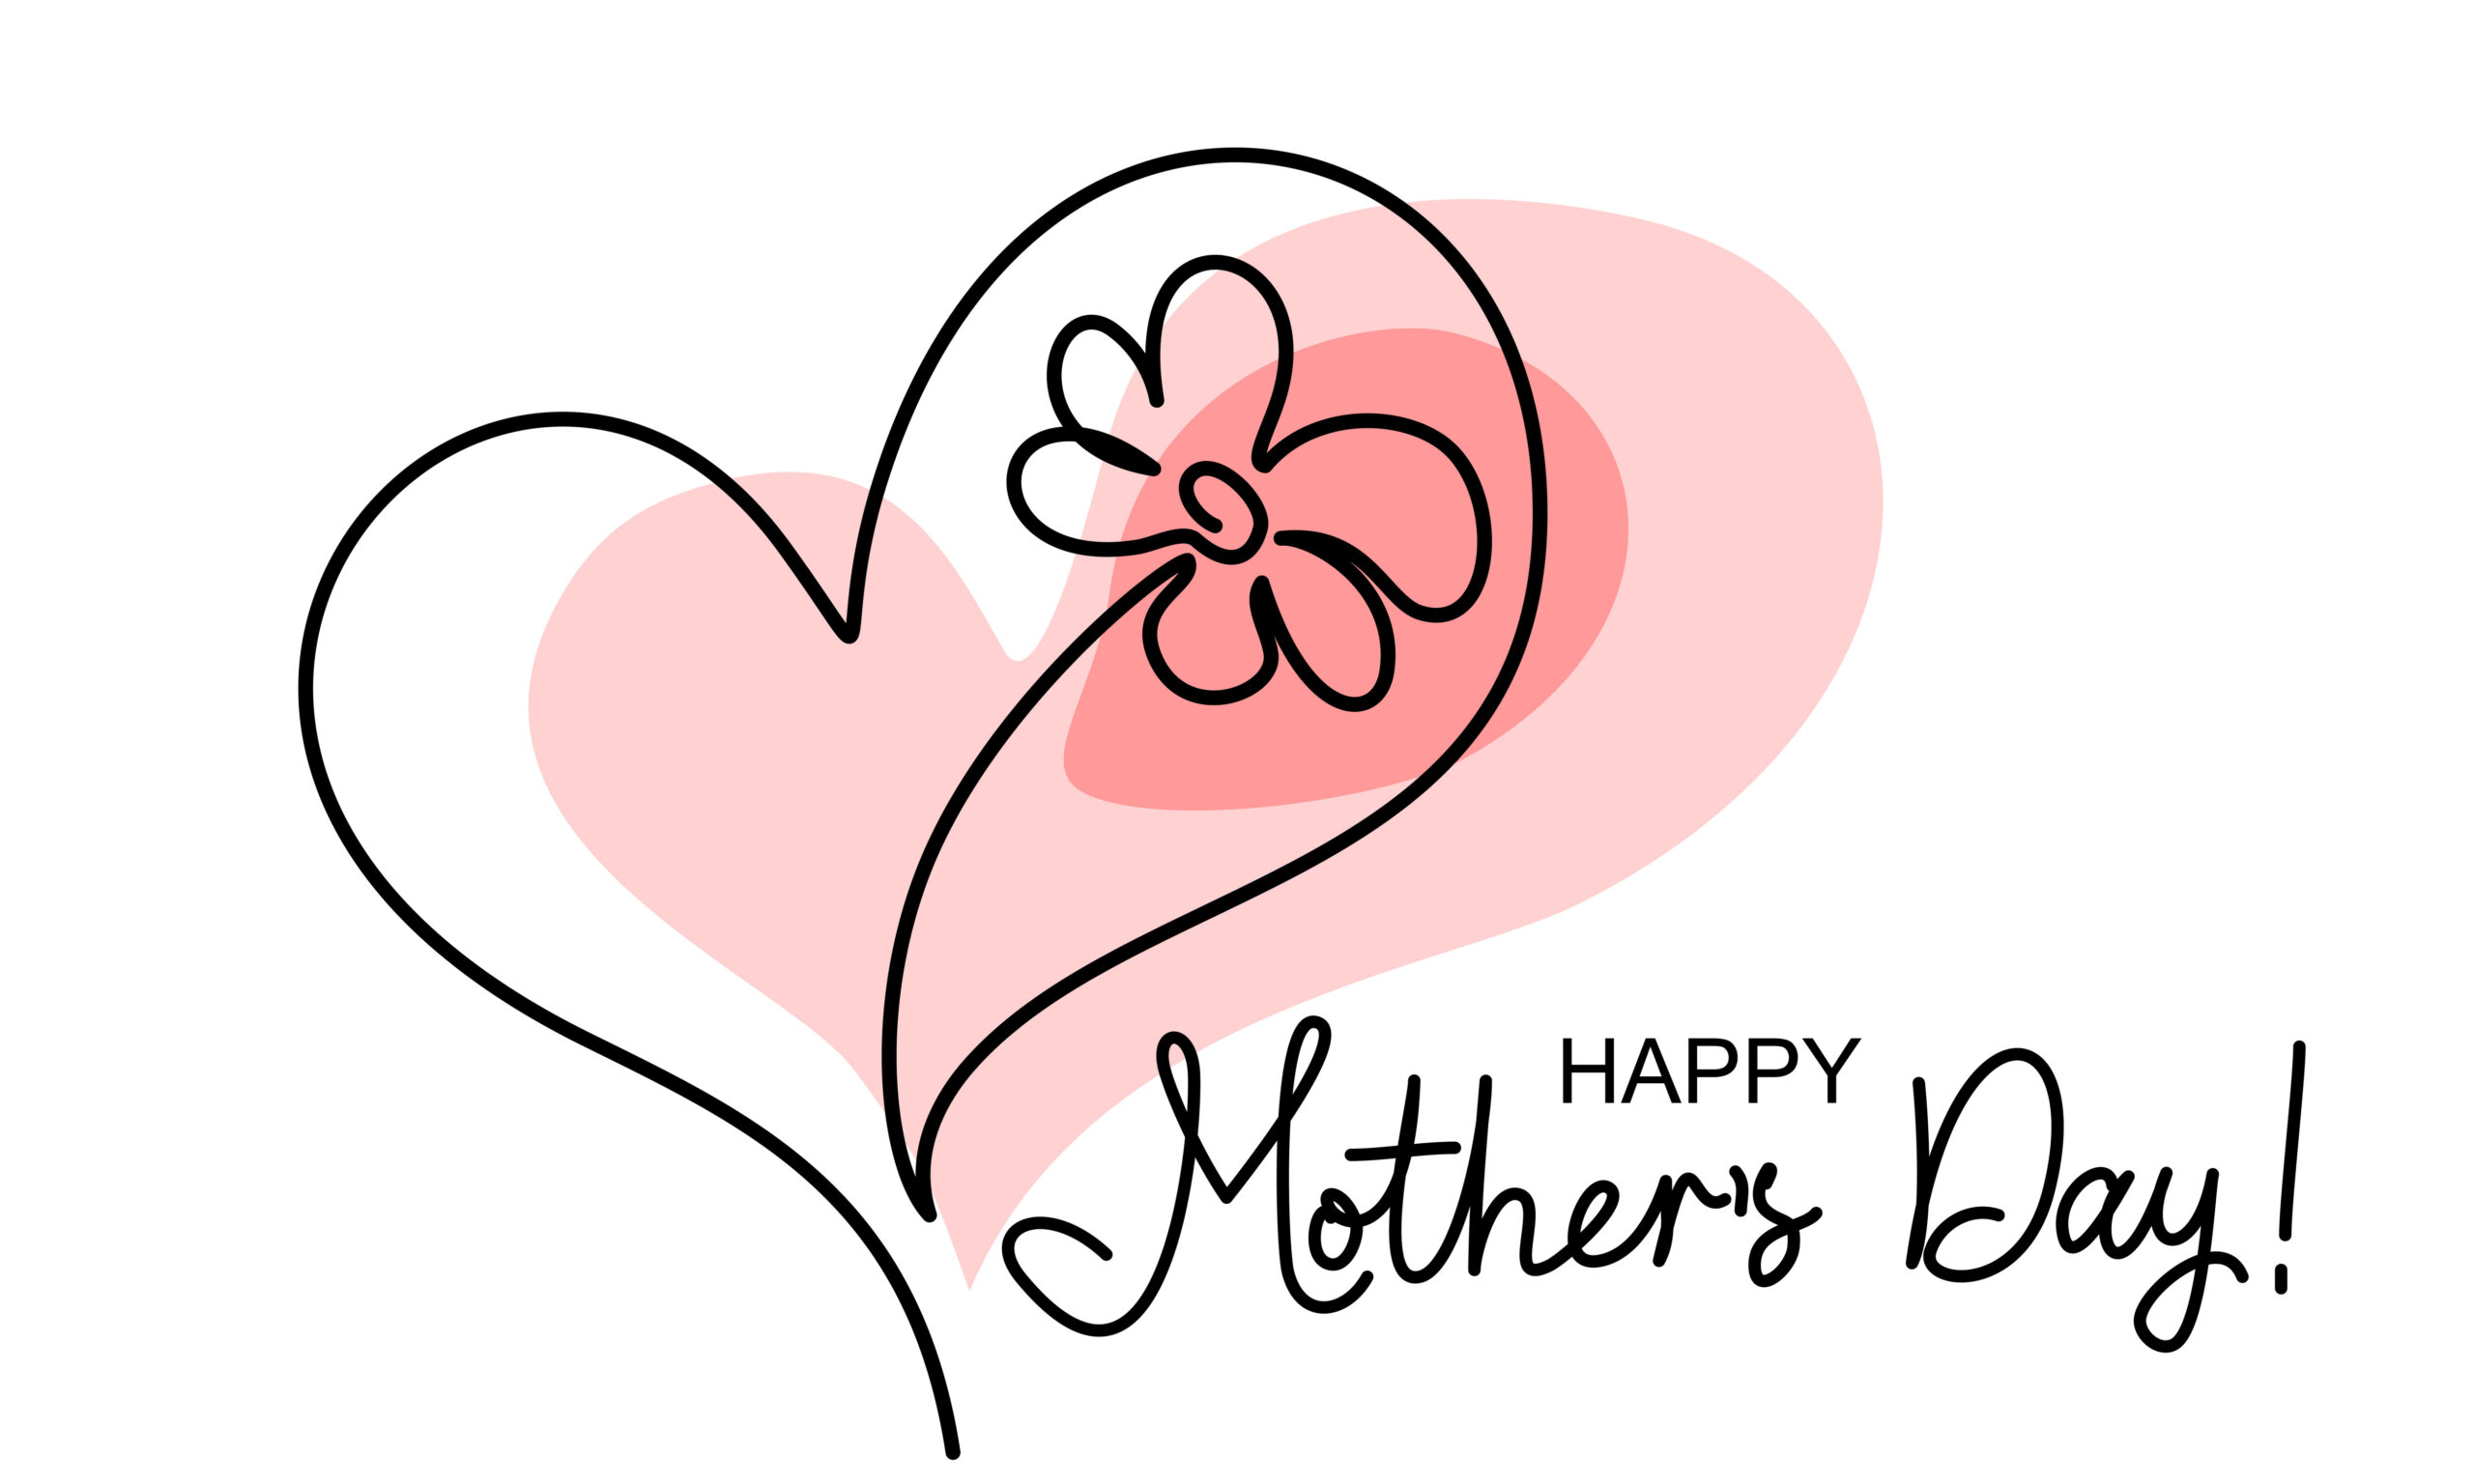 Happy Mother day card. Flower inside heart